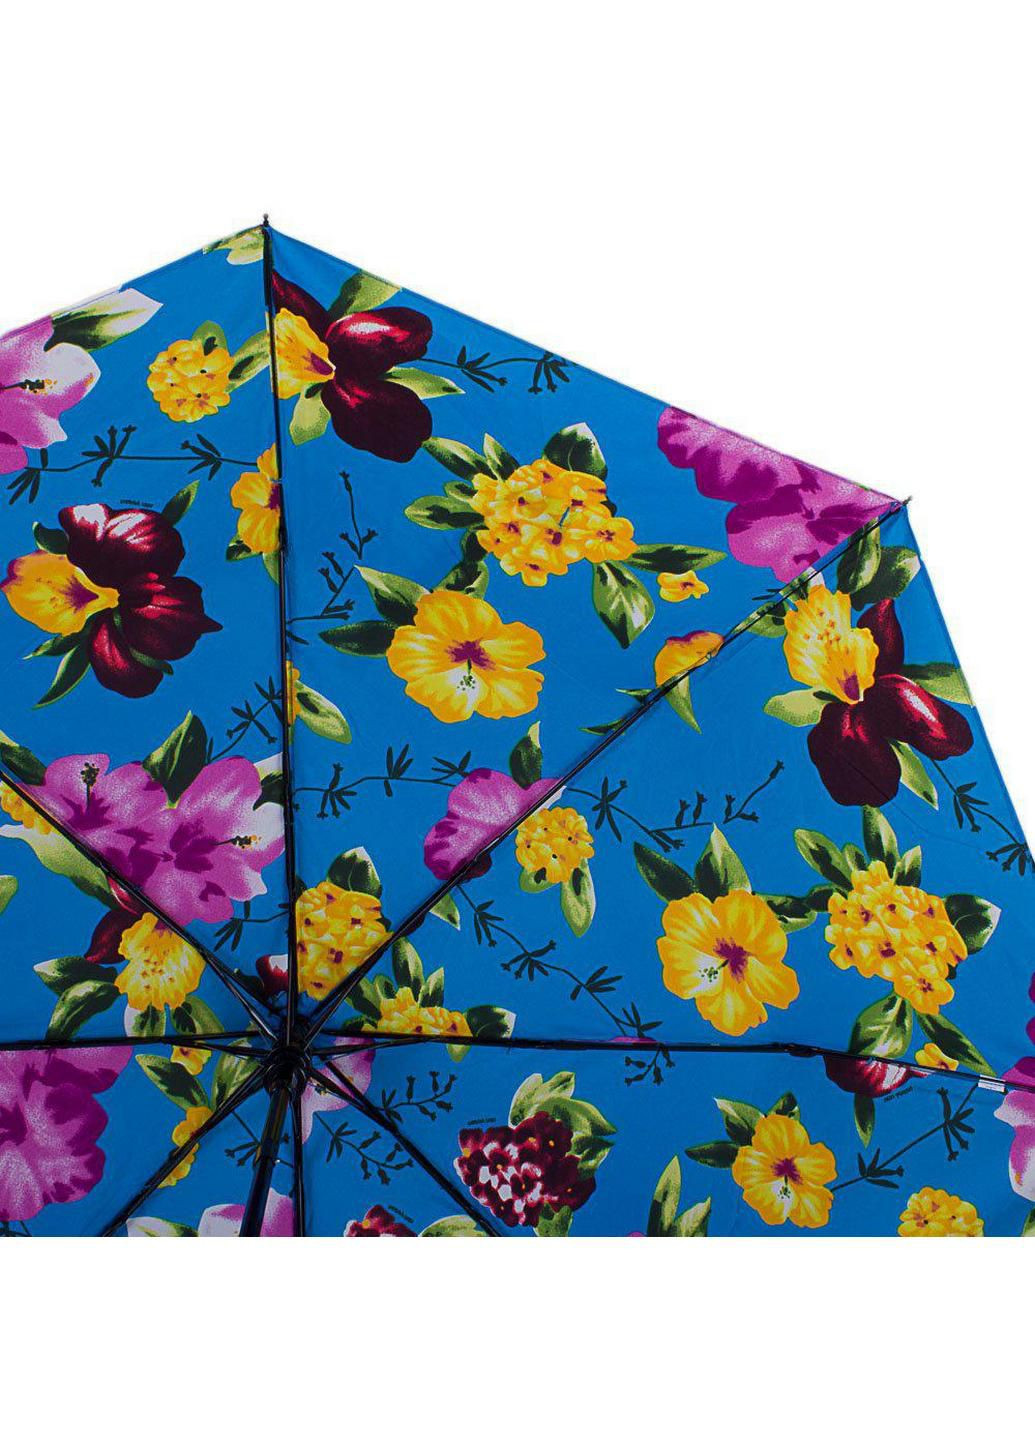 Складна парасолька напівавтомат 95 см Happy Rain (197766698)